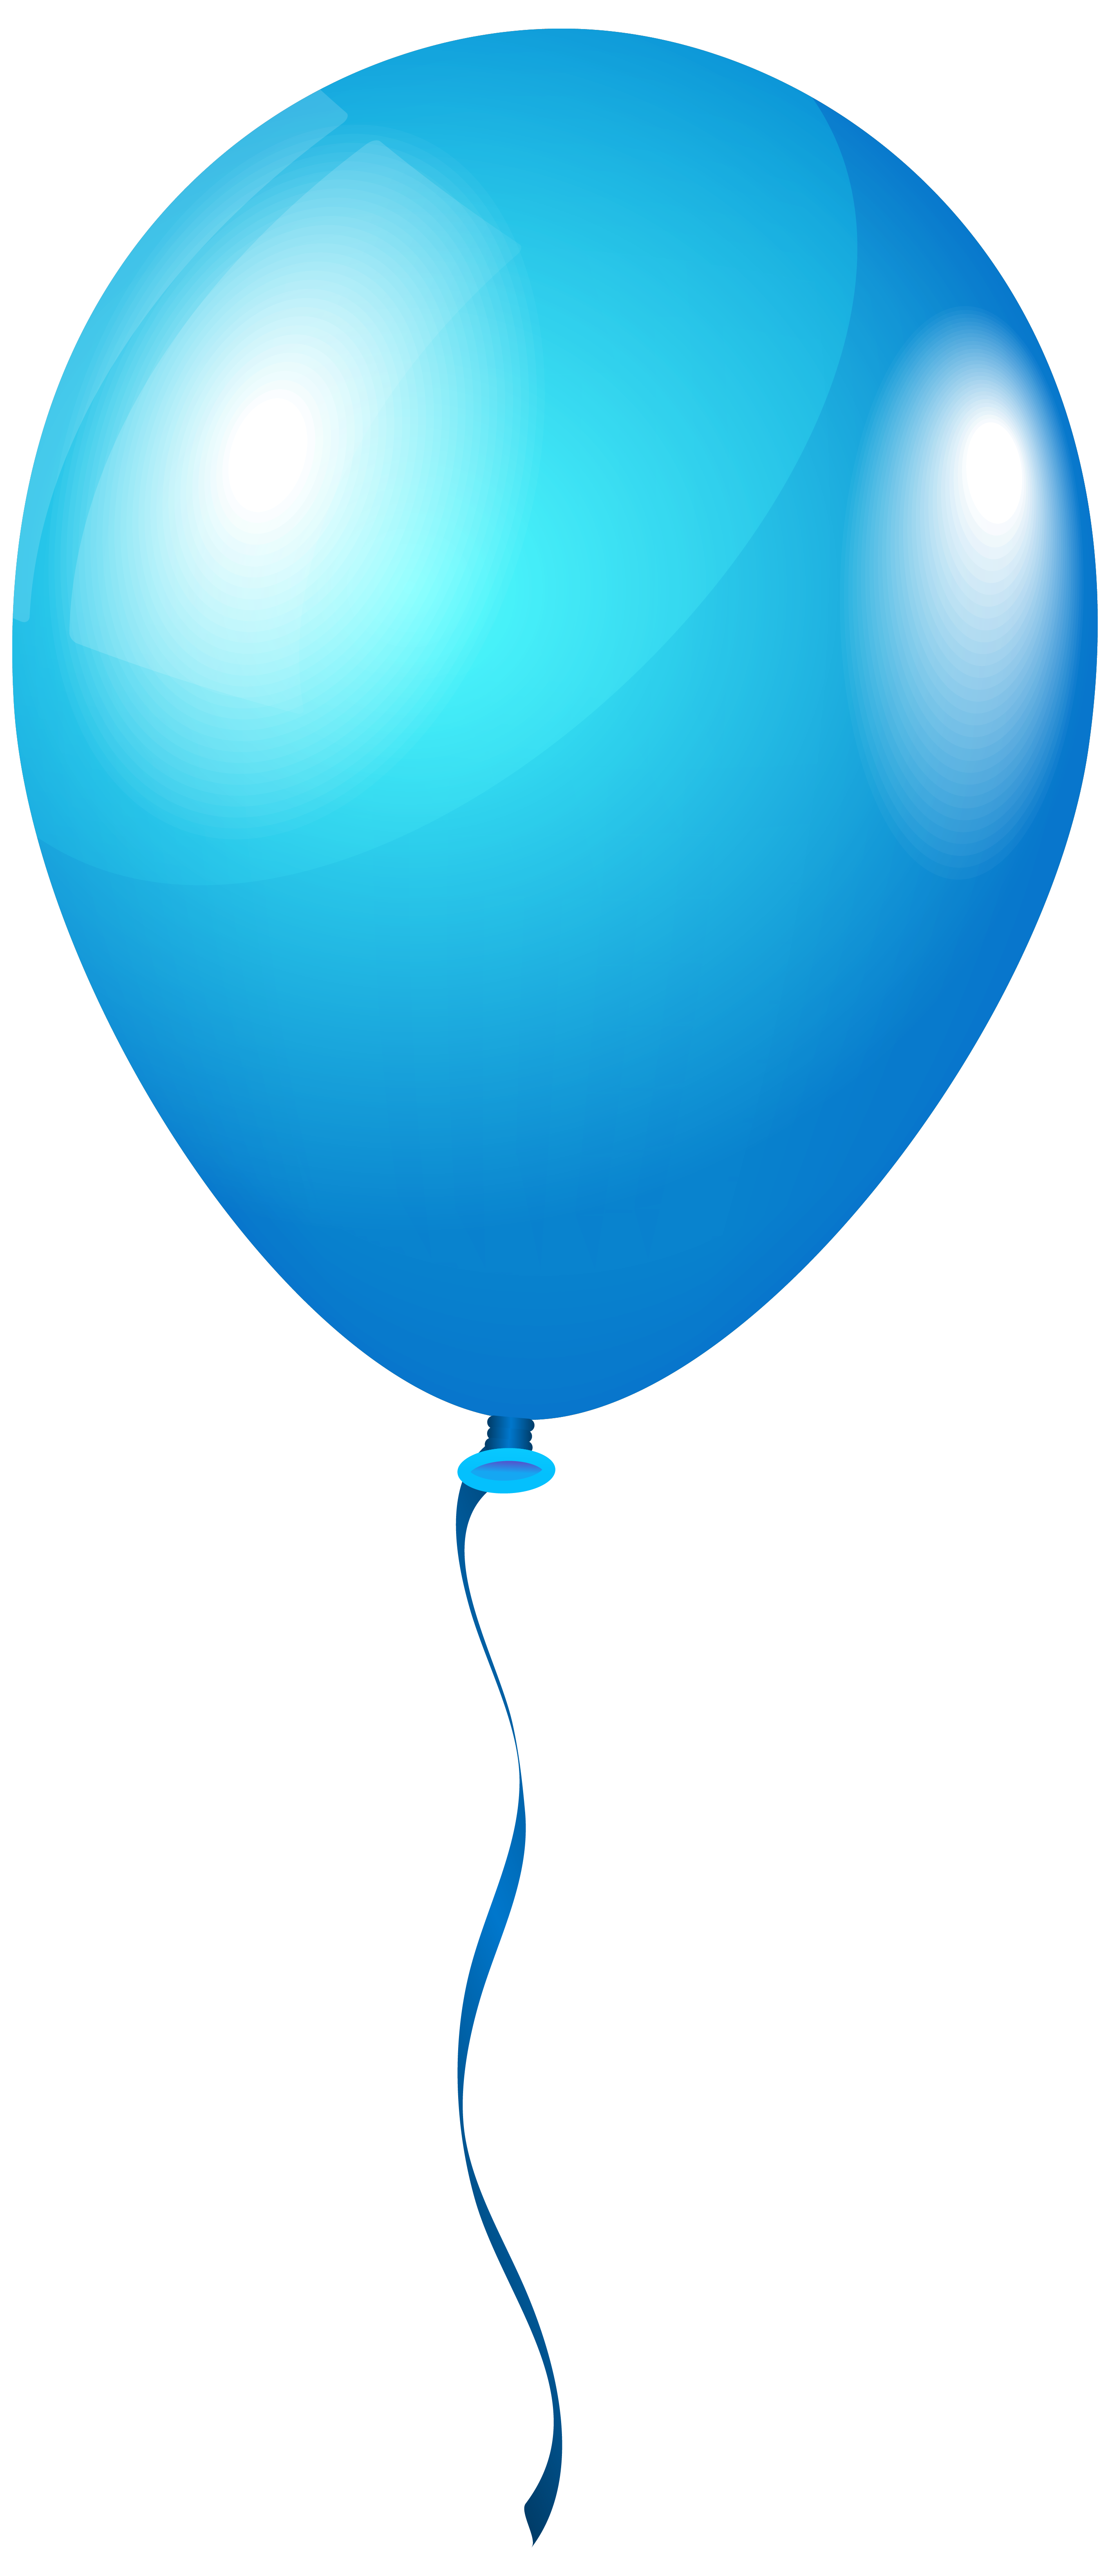 Balloon PNG Image